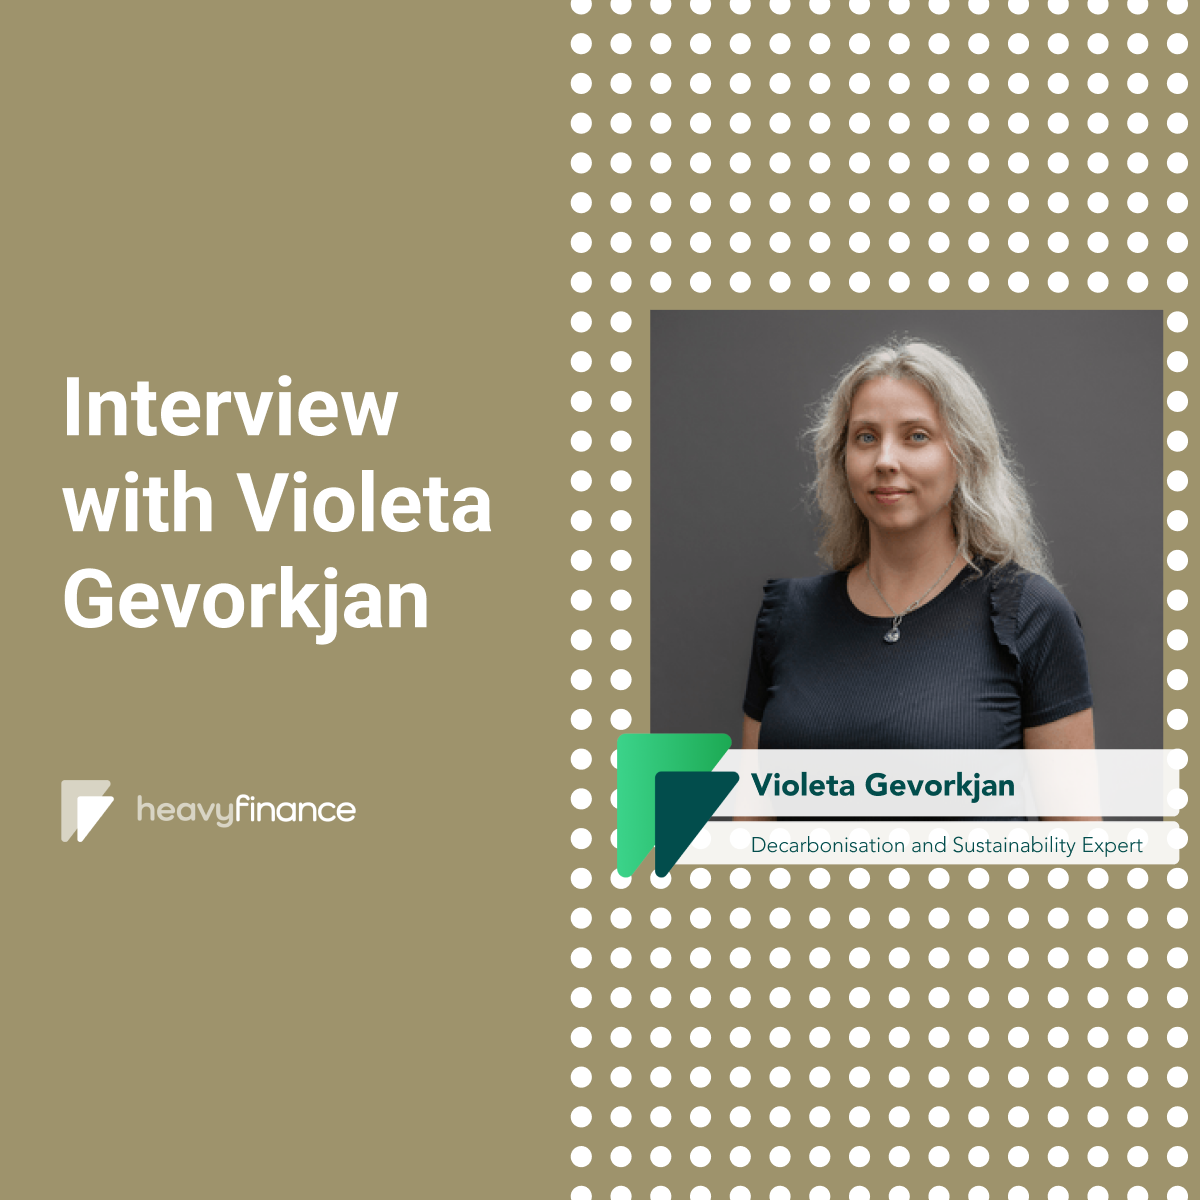 Decarbonisation and sustainability expert Violeta Gevorkja, HeavyFinance